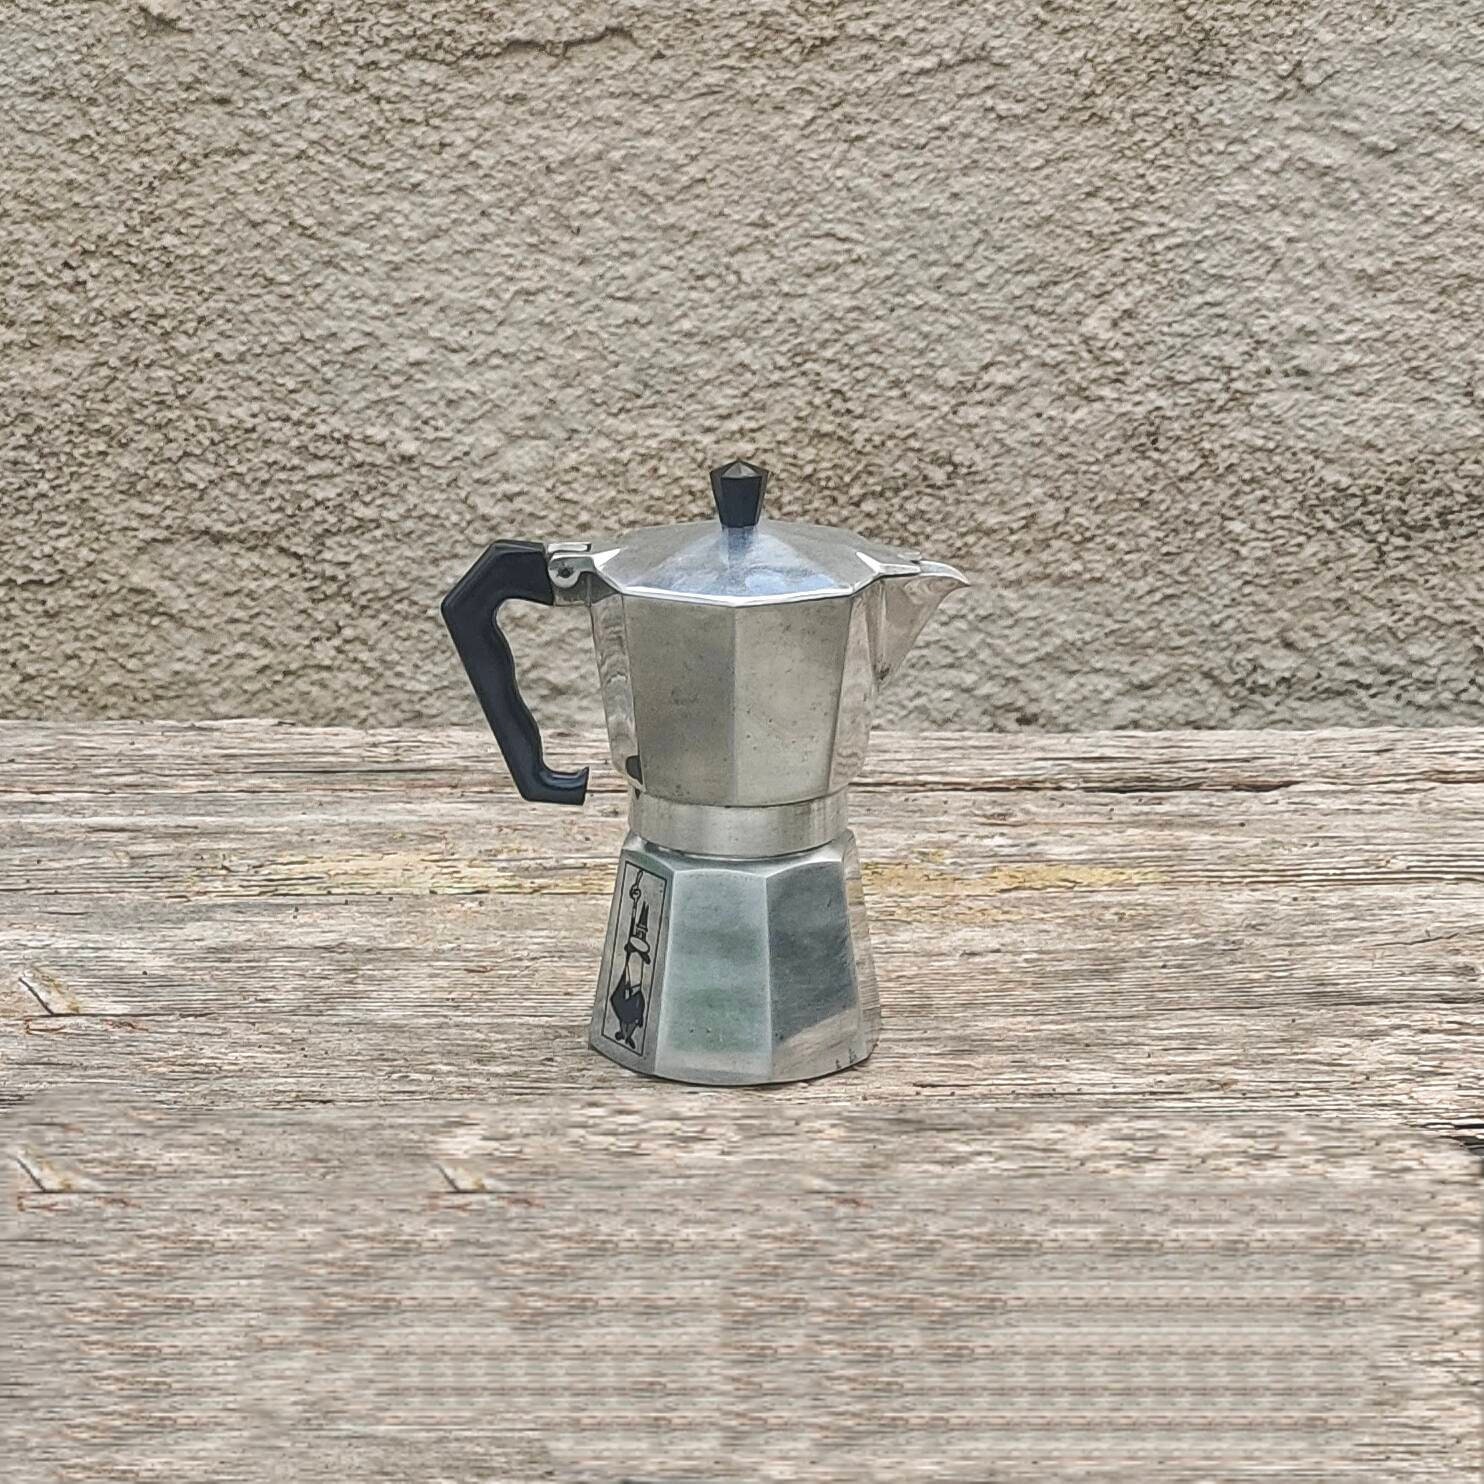 Bialetti Crusinallo Stovetop Stainless Steel Espresso Maker Coffee Pot  Vintage